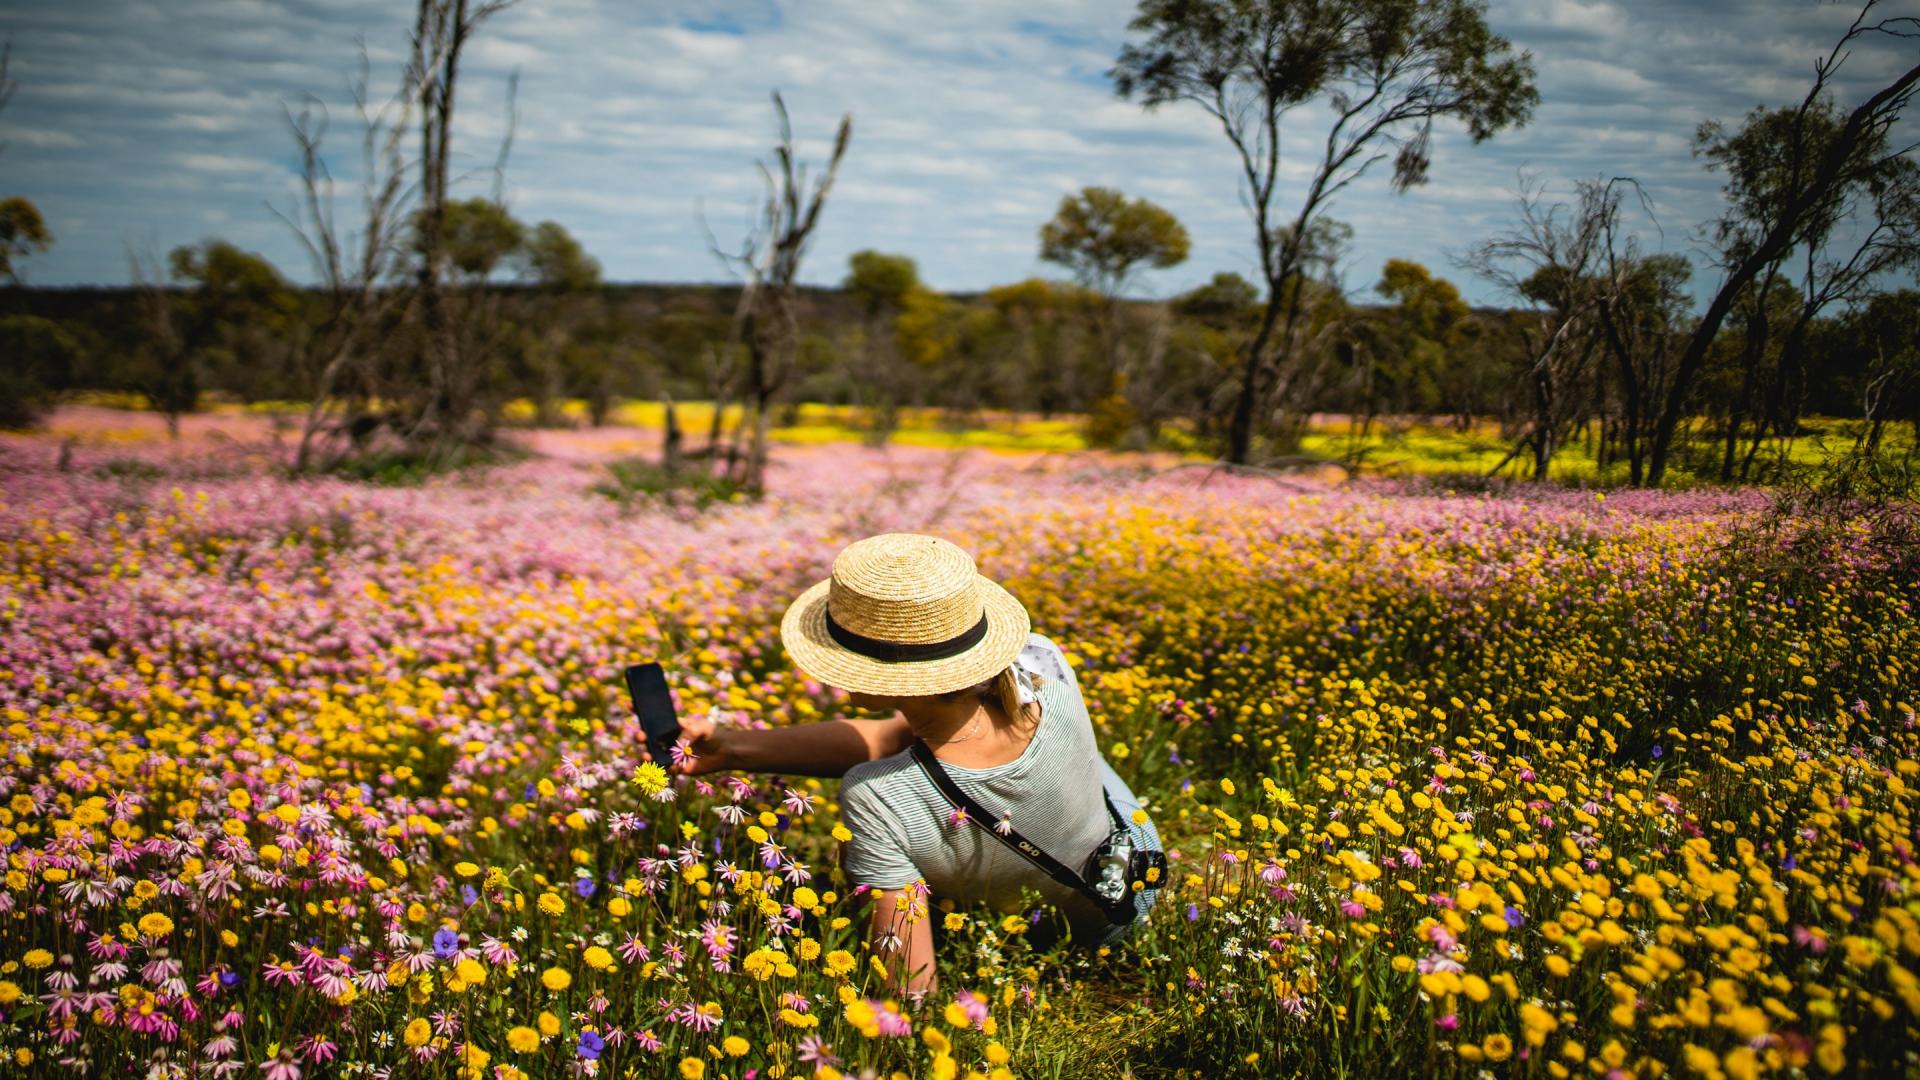 Springtime in beautiful Western Australia